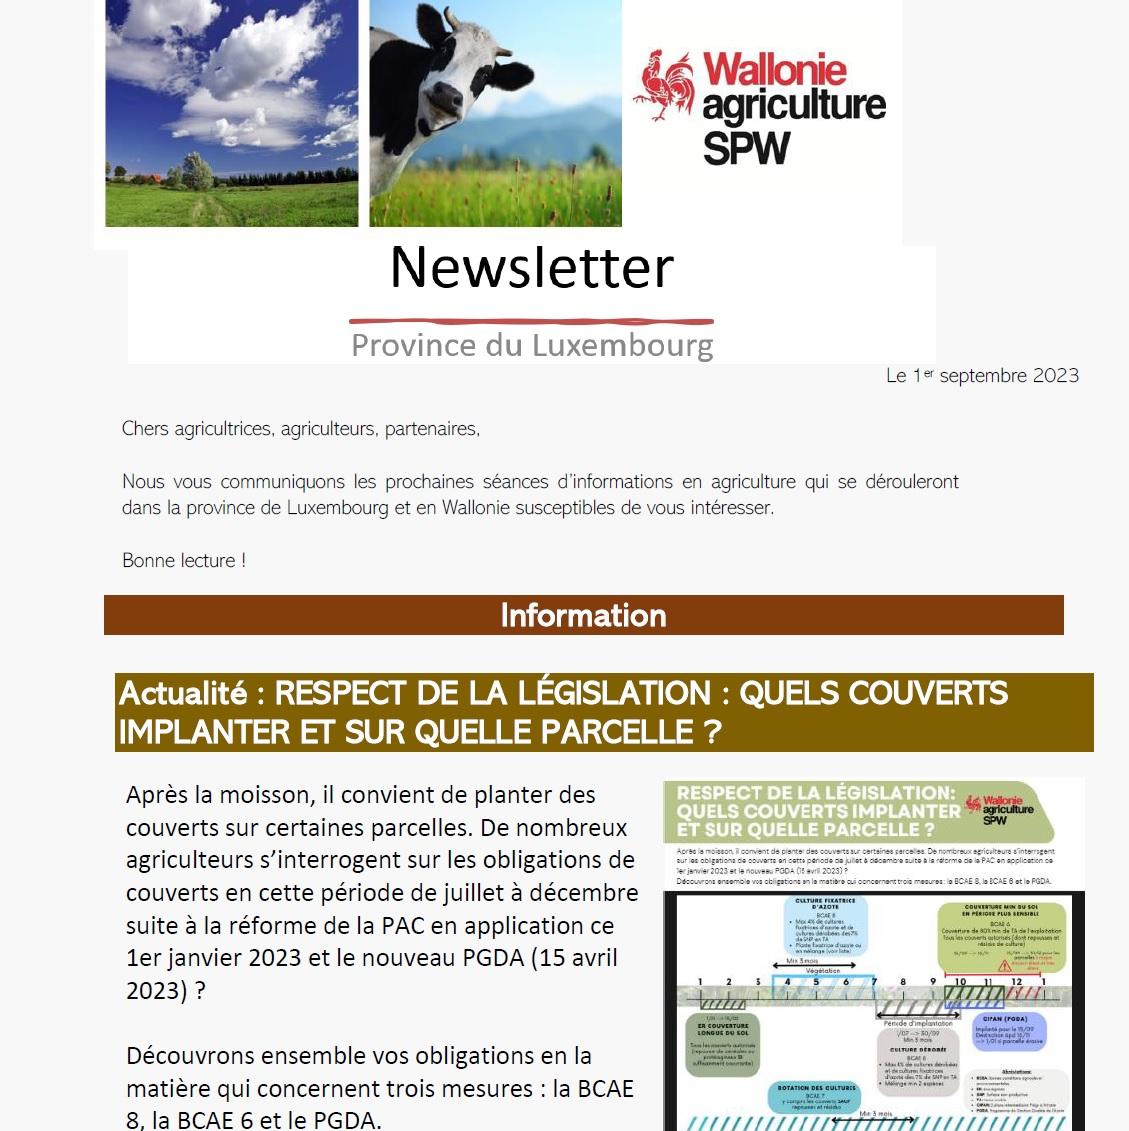 Newsletter SPW Agriculture en province du Luxembourg du 01-09-23